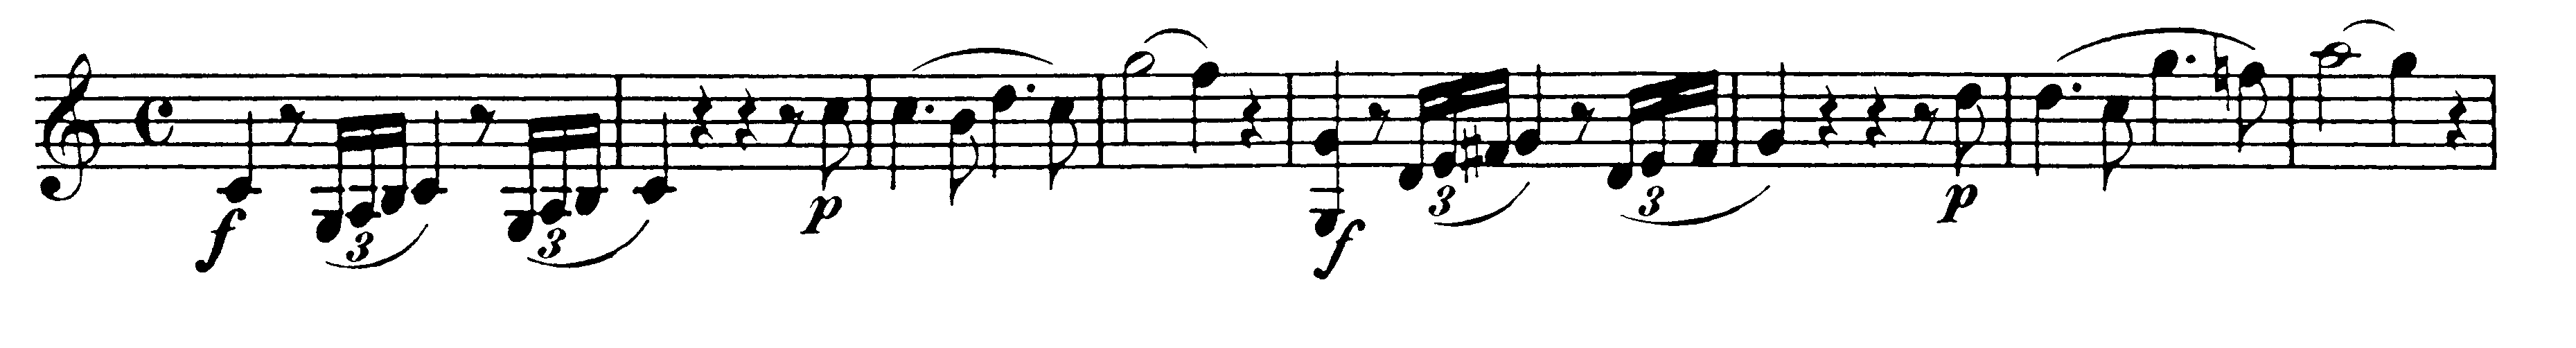 Notexempel, symfoni 41:I